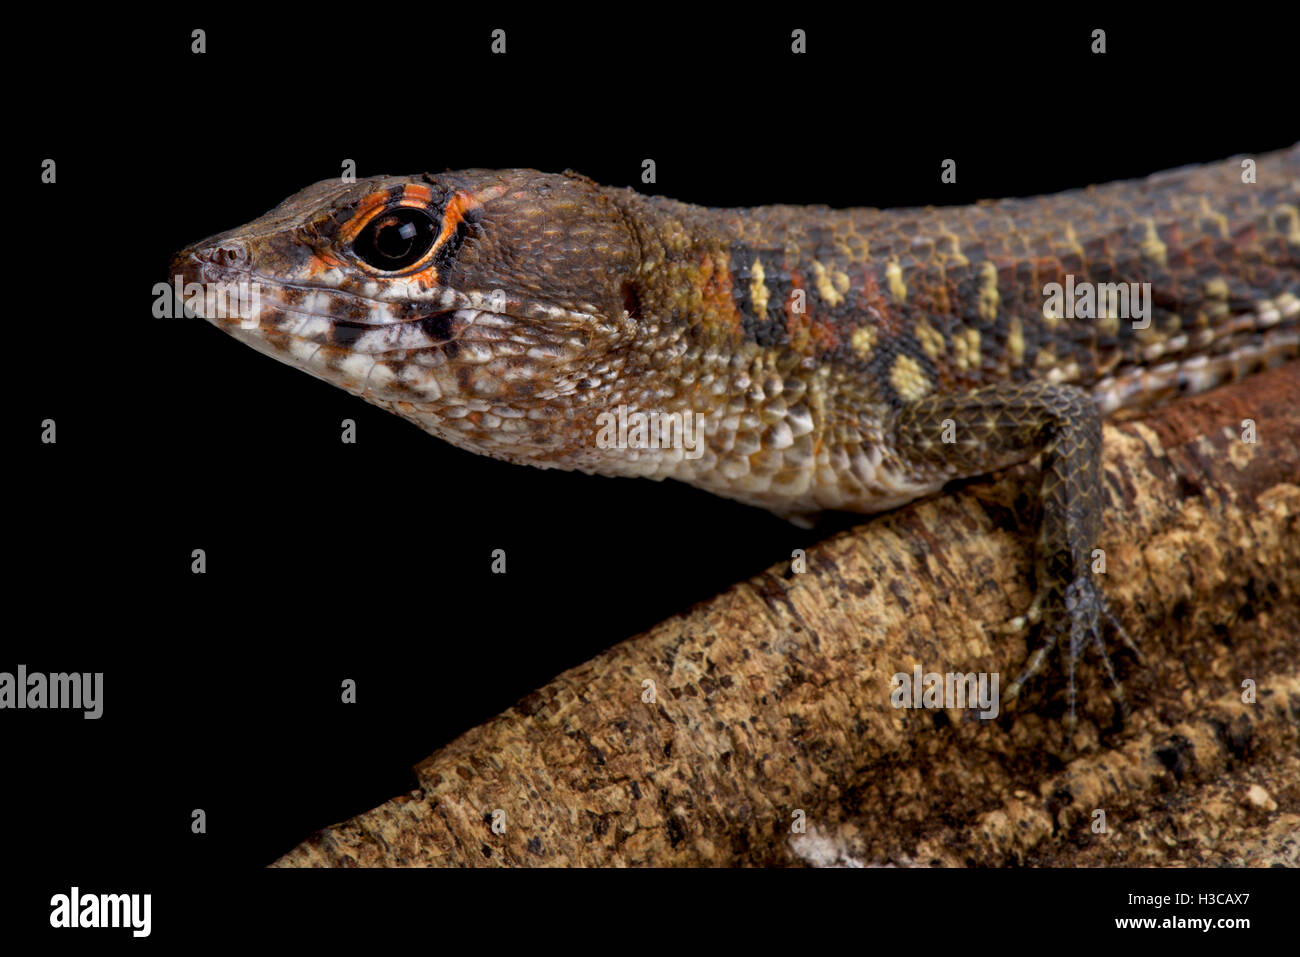 Two faced water teju,Neusticurus bicarinatus,Suriname Stock Photo